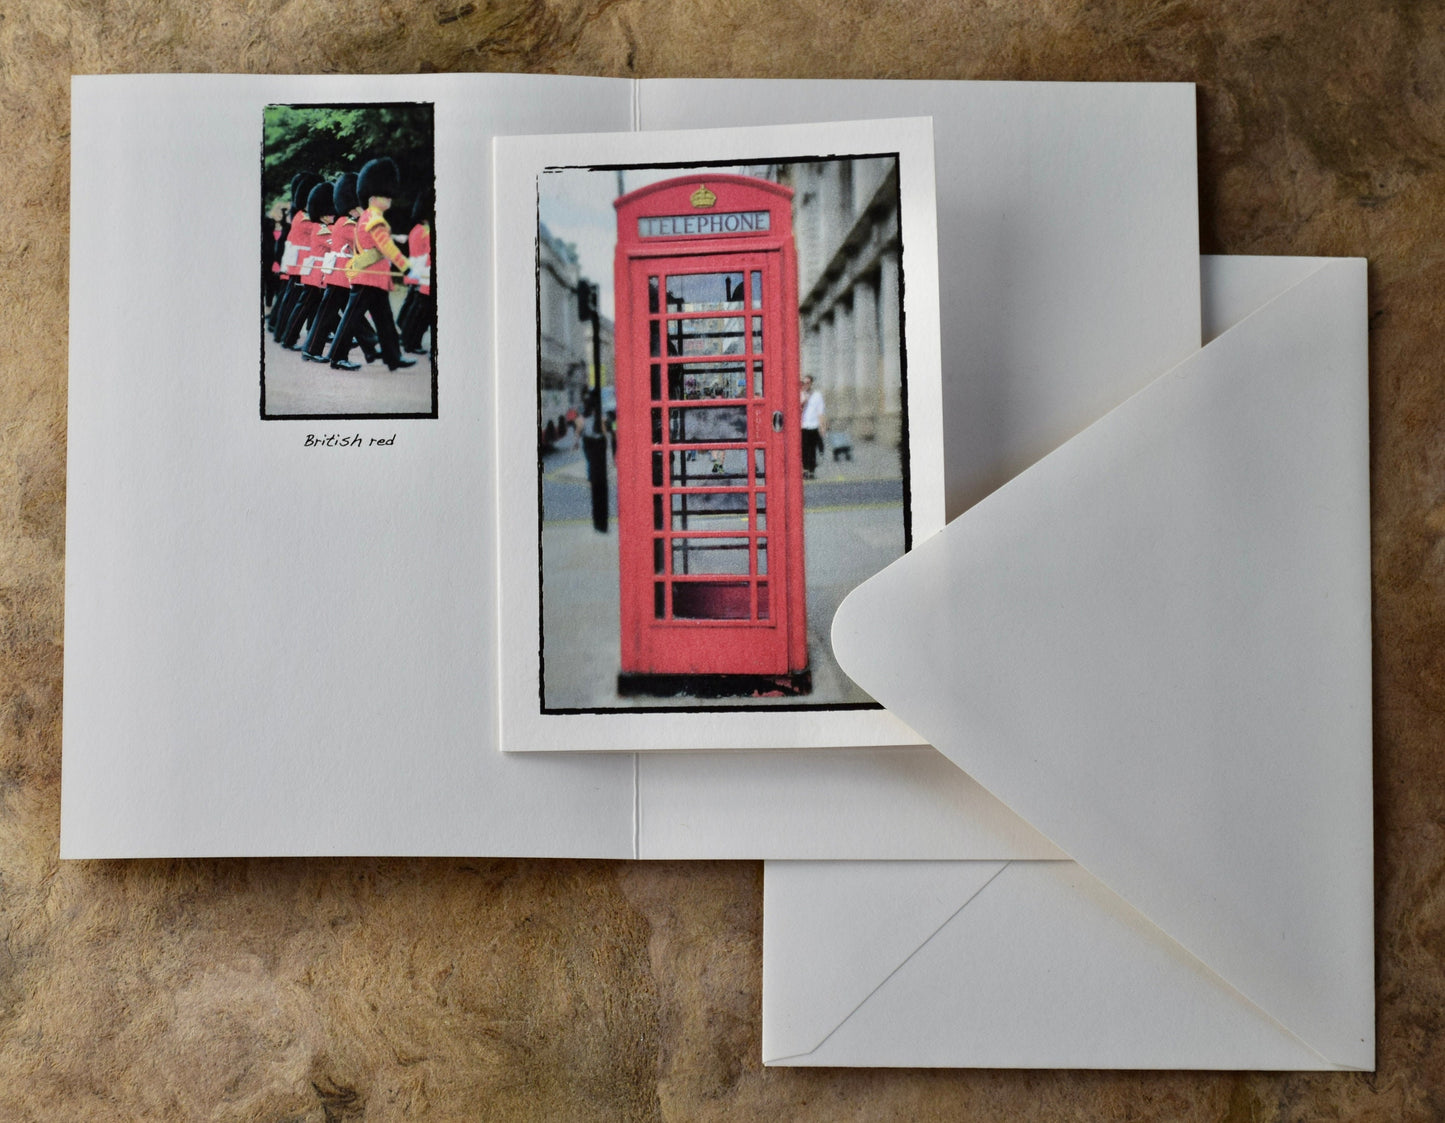 London Greeting Cards - Eco-Friendly, Greeting Cards London Landmarks